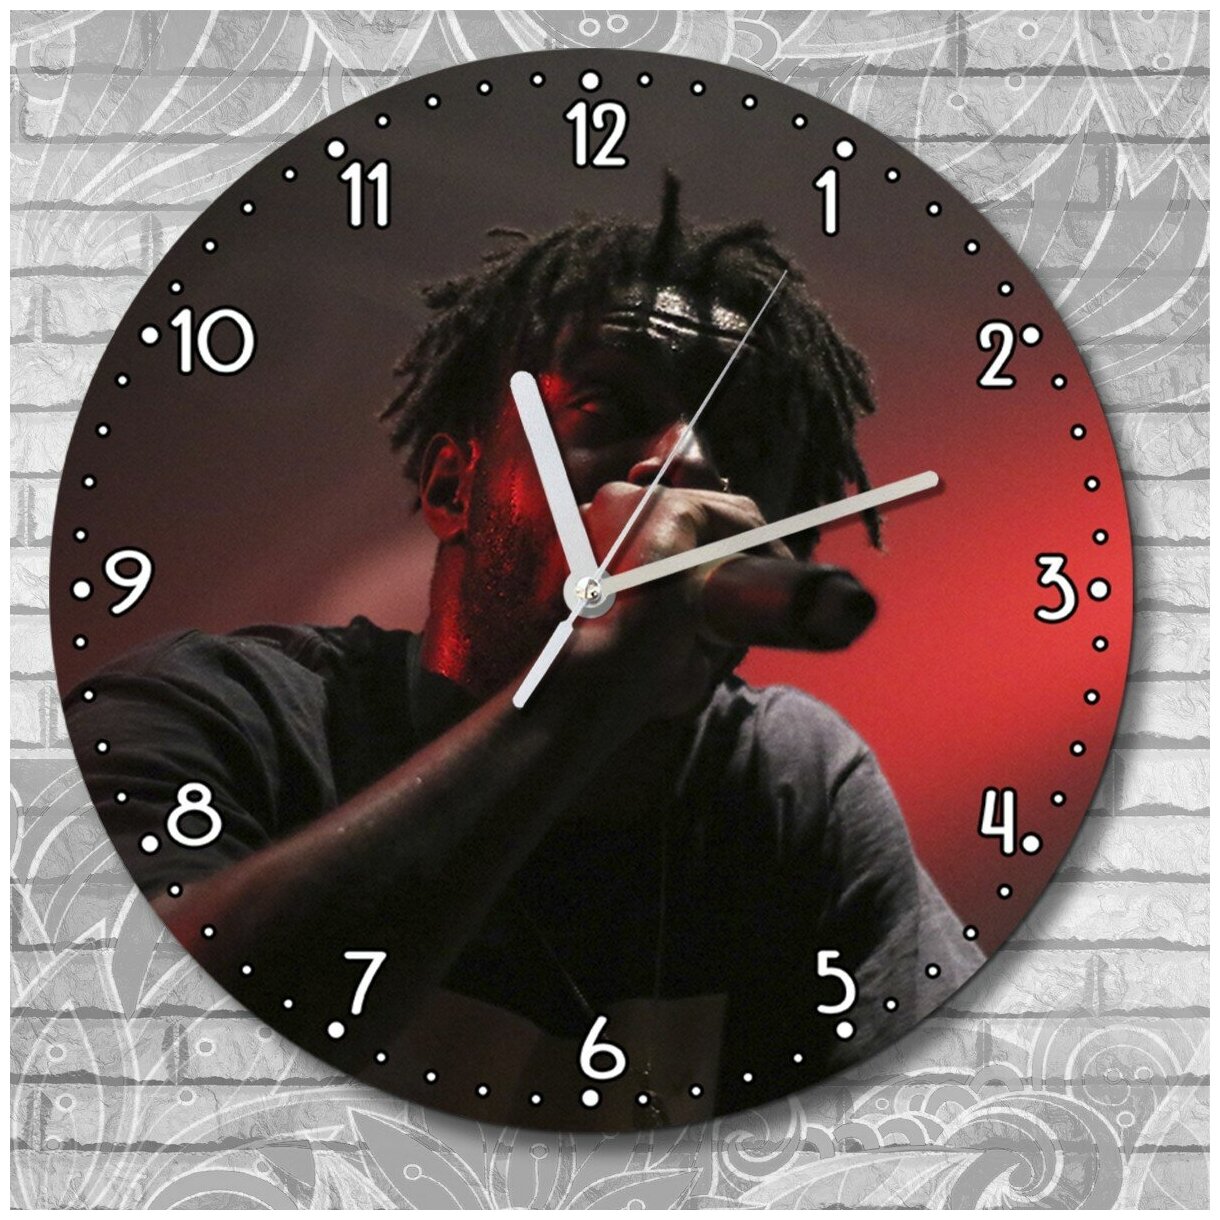 Настенные часы УФ музыка (music, rap, hip hop, sound, руки вверх, hands up, style, graffiti, life) - 2030